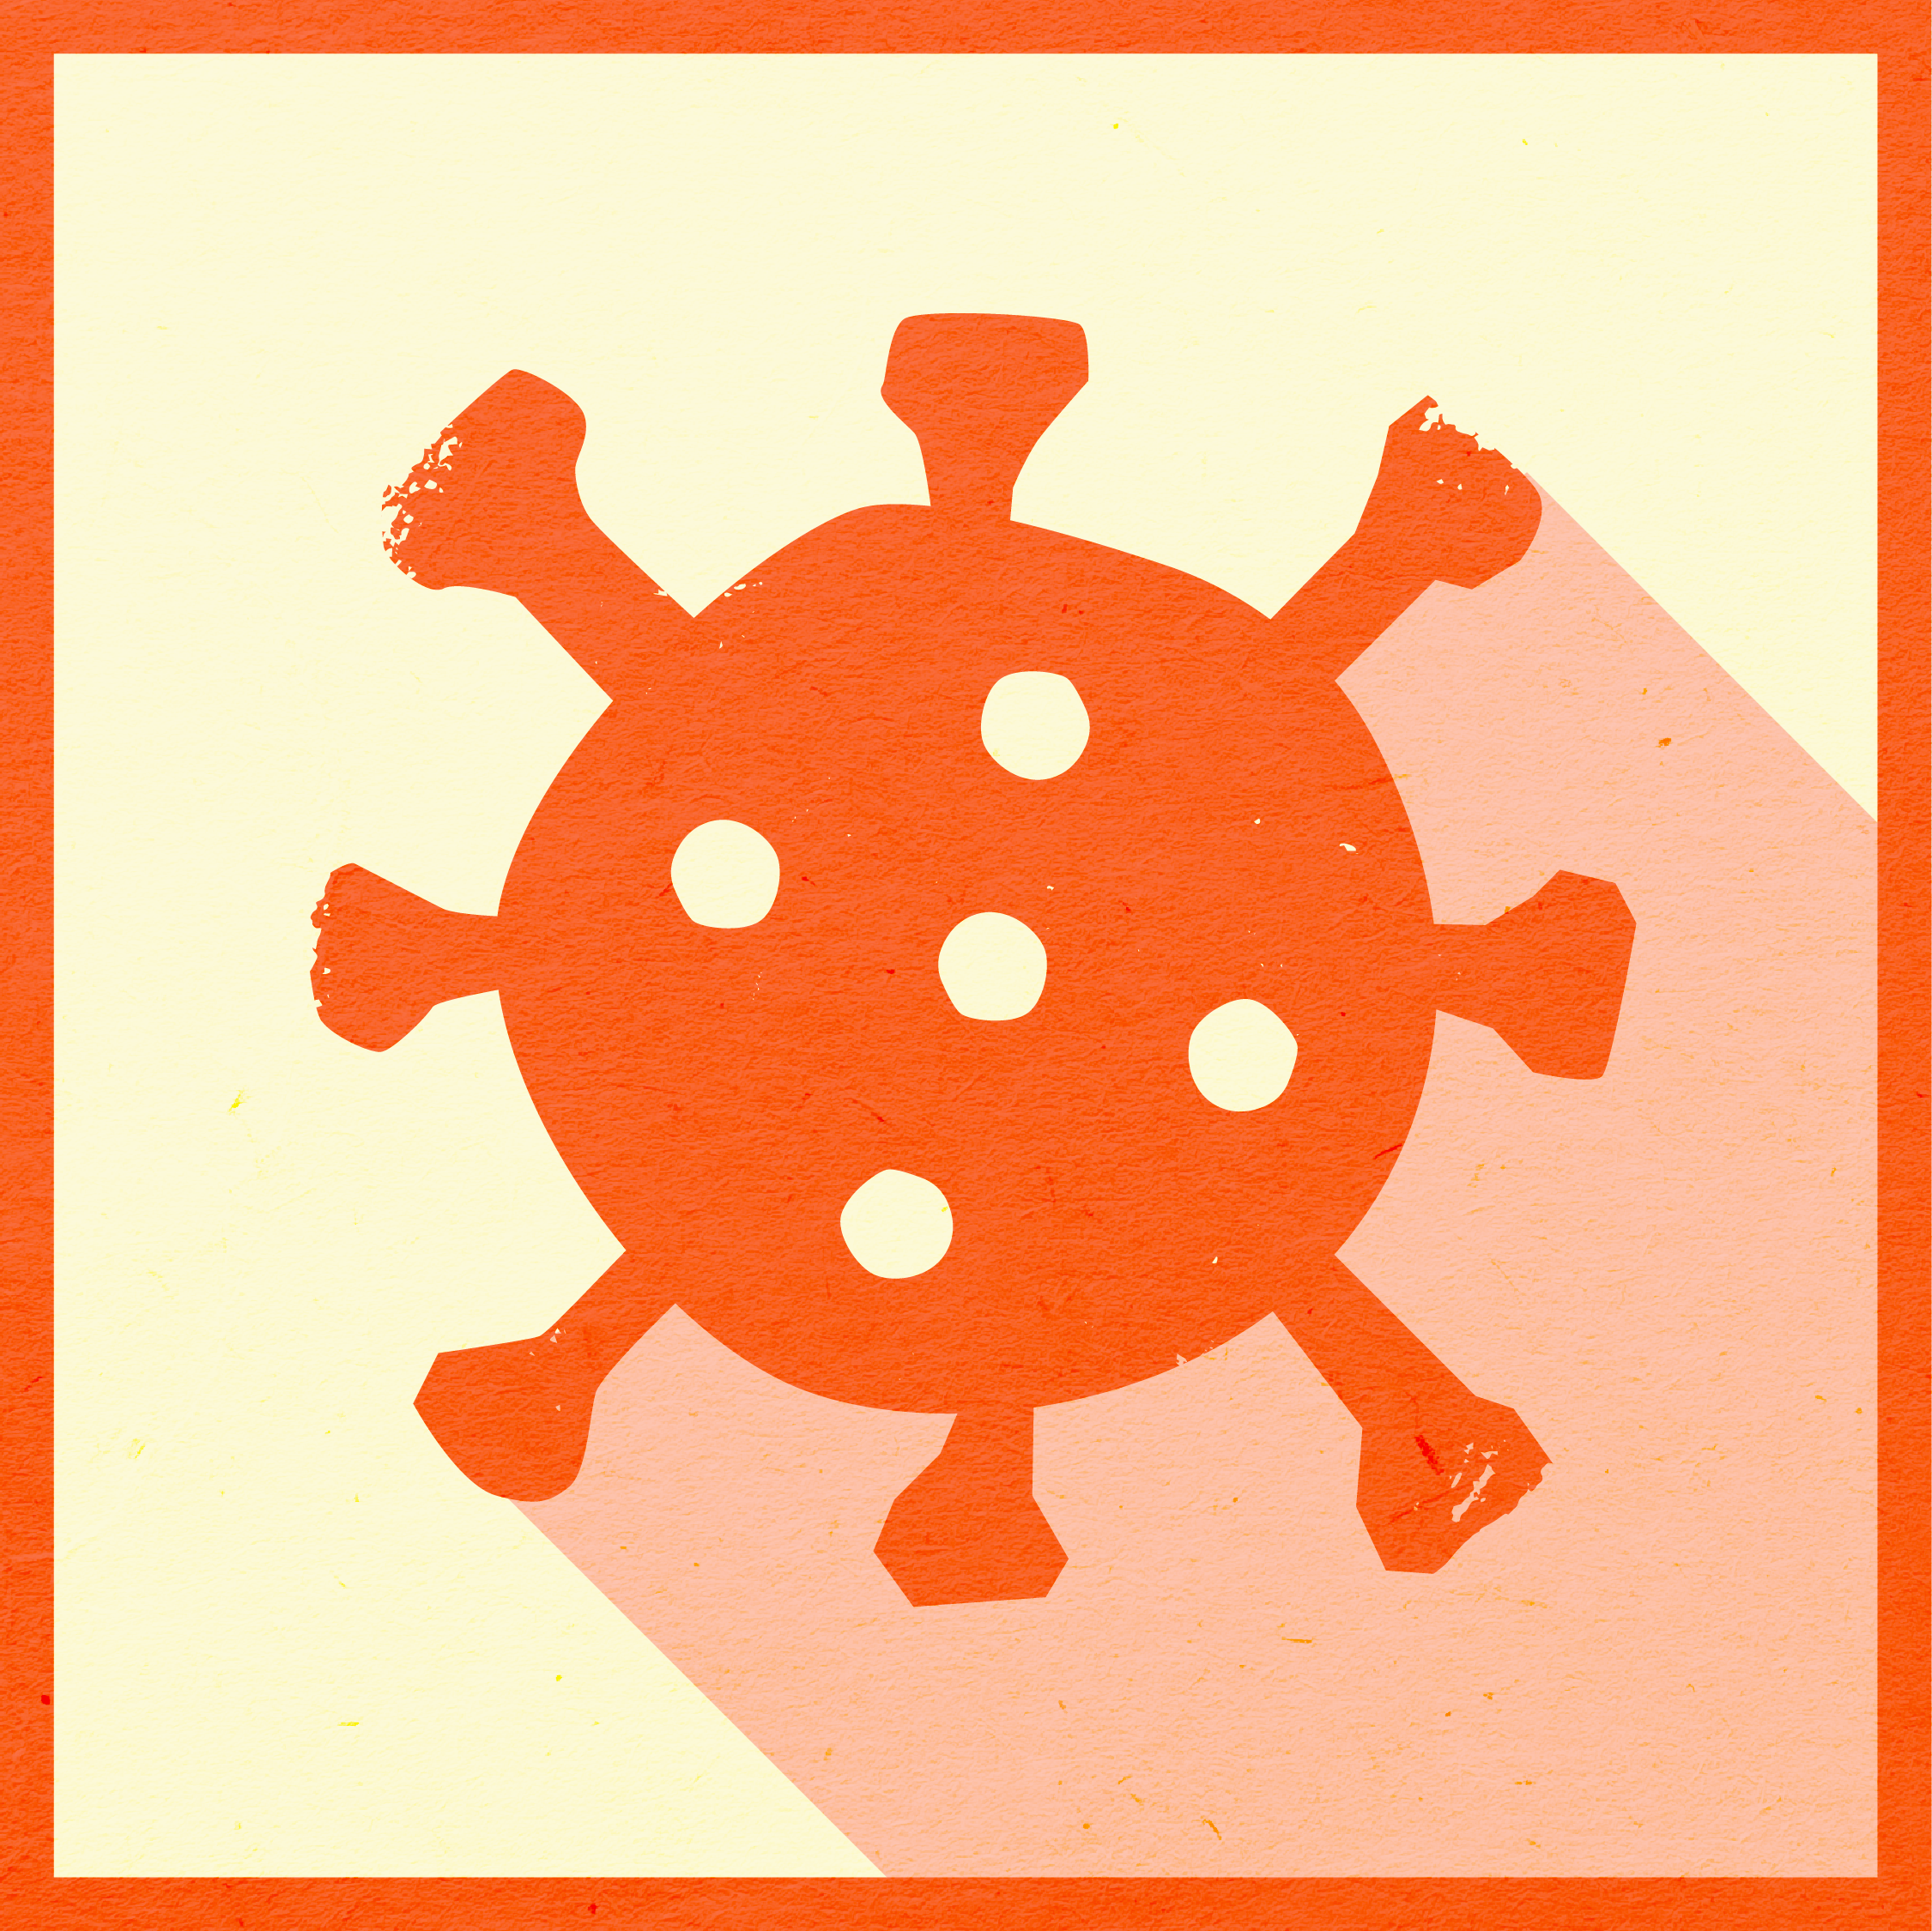 Framed illustration of a COVID-19 virus